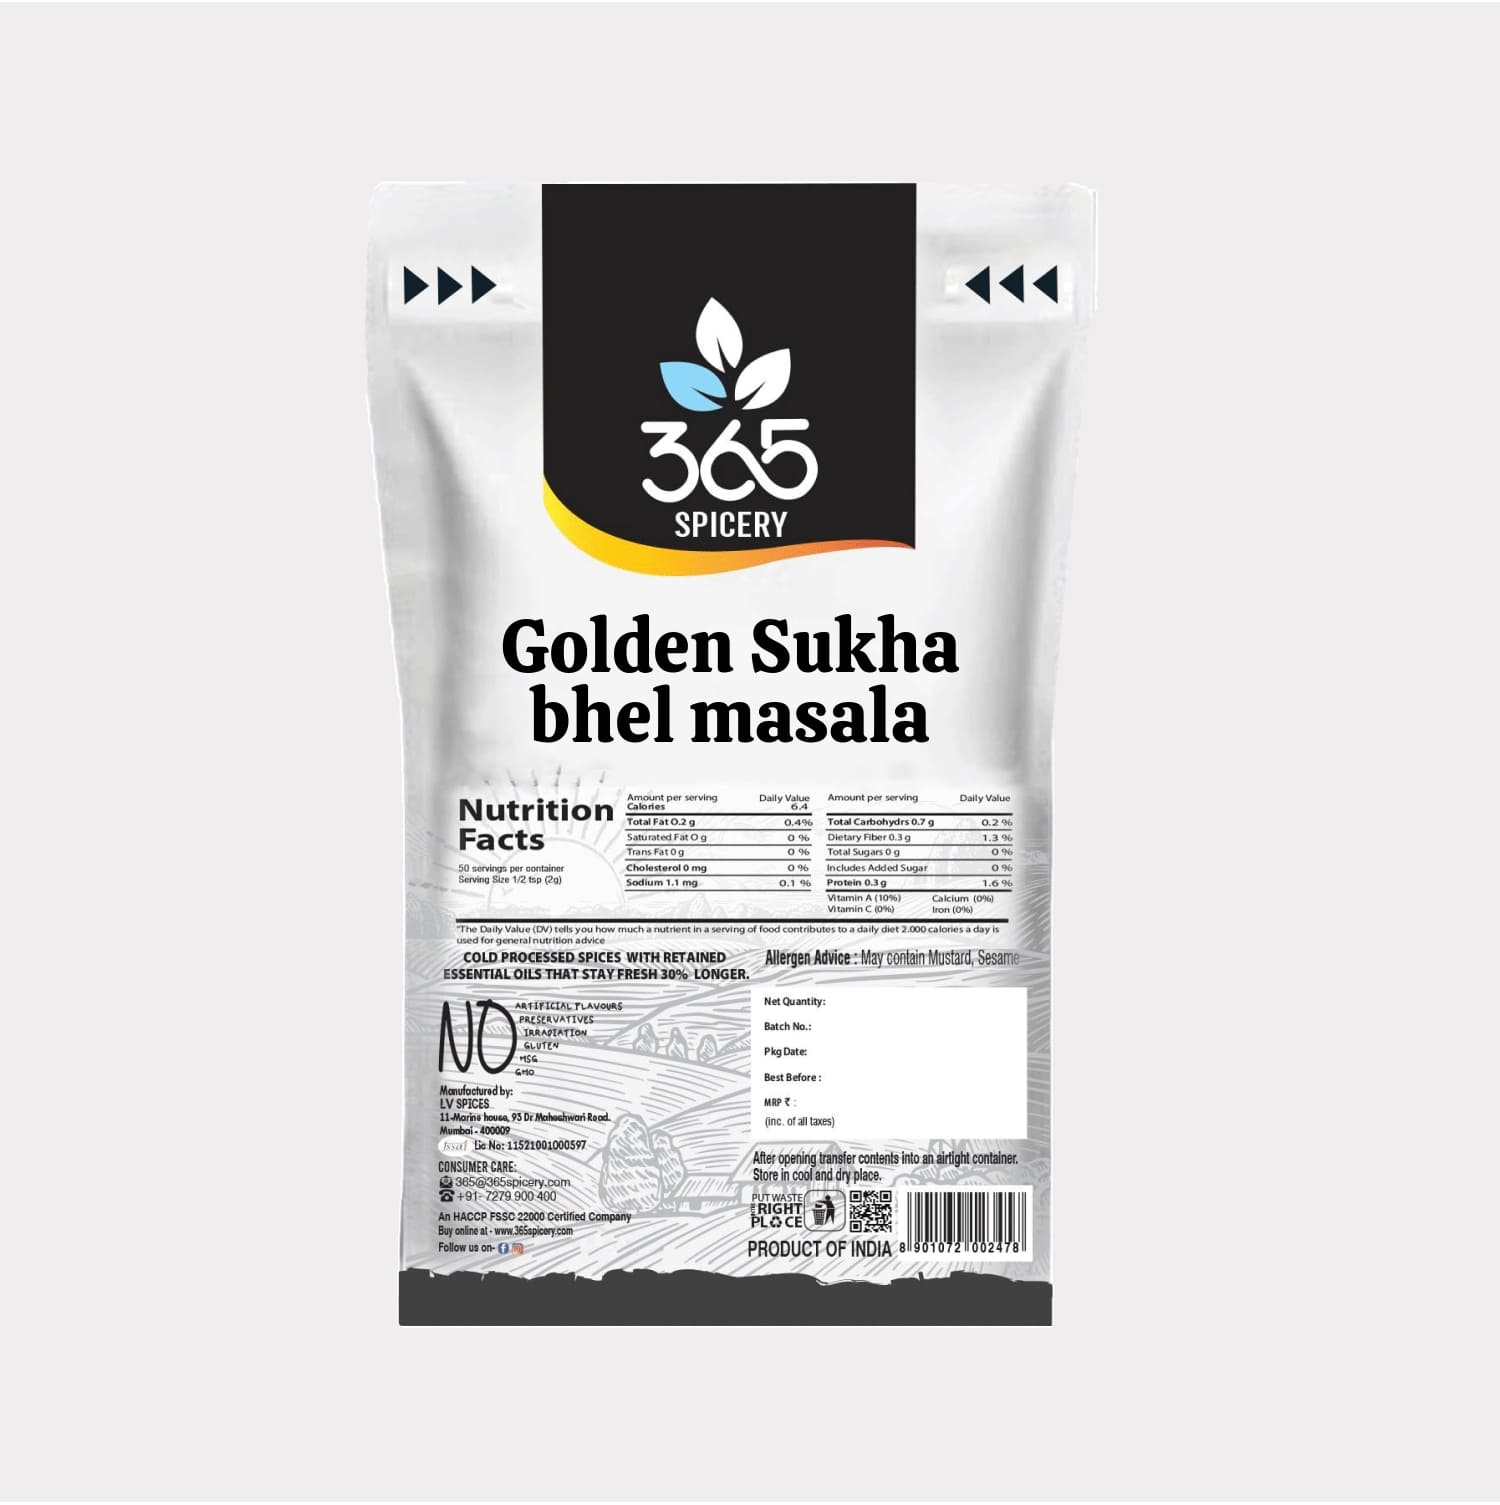 Golden Sukha bhel masala